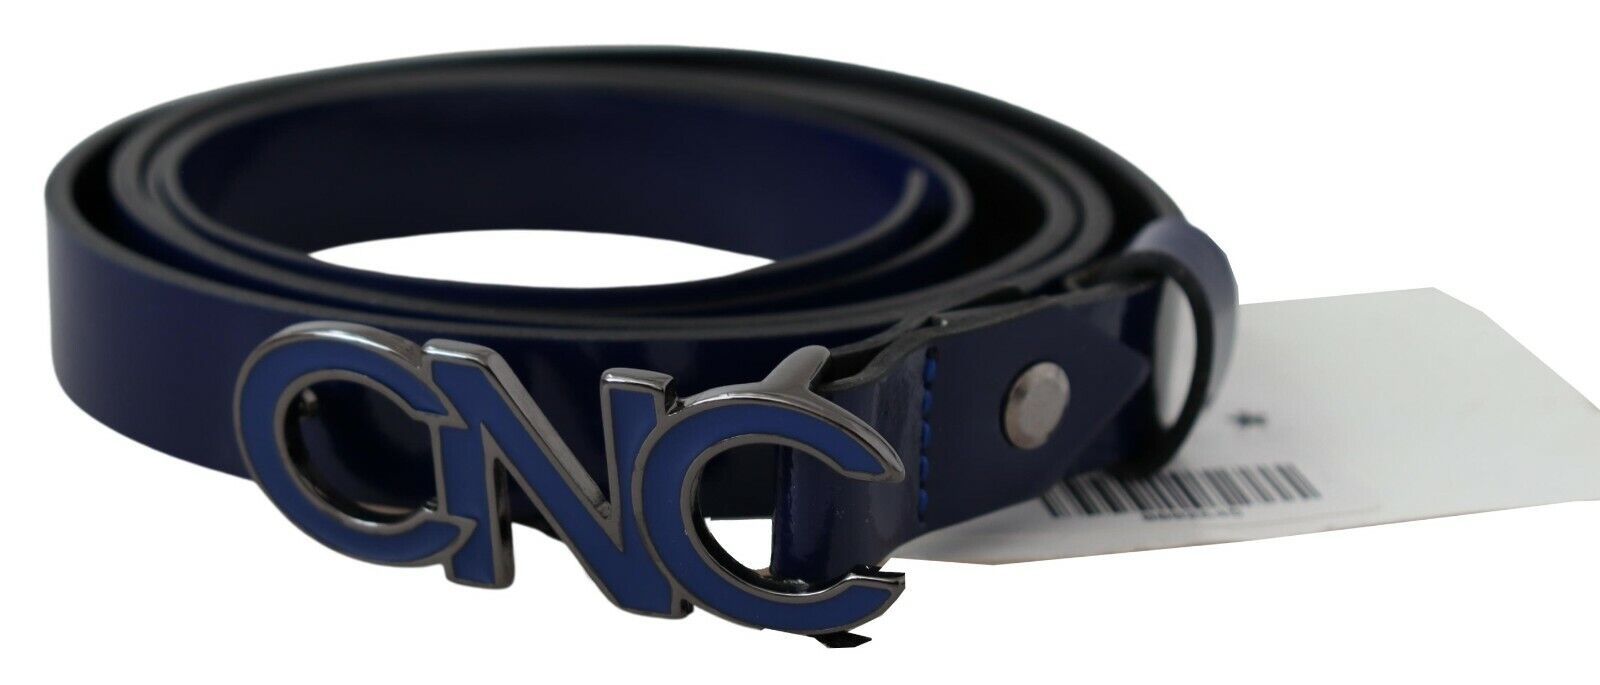 Sleek Dark Blue Leather Fashion Belt